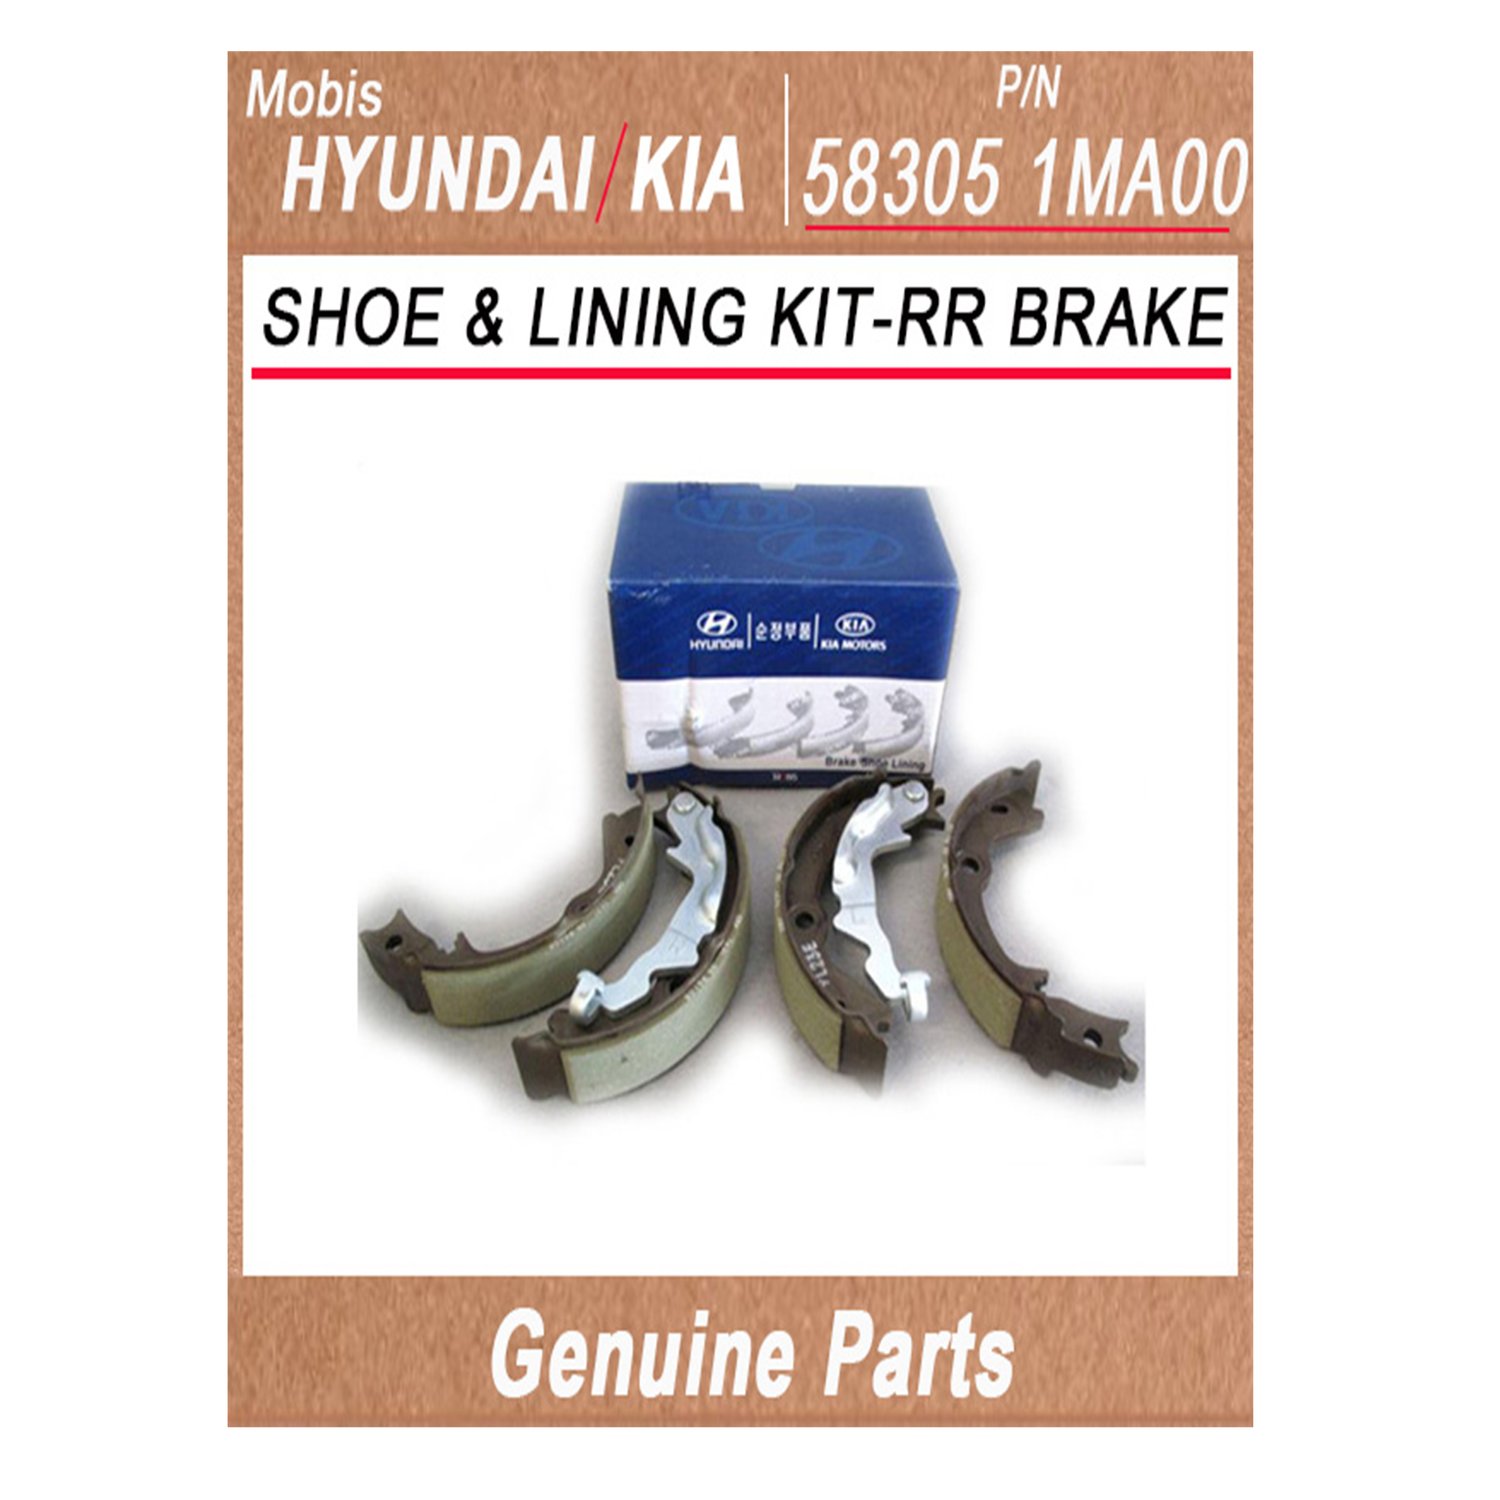 583051MA00 _ SHOE _ LINING KIT_RR BRAKE _ Genuine Korean Automotive Spare Parts _ Hyundai Kia _Mobis